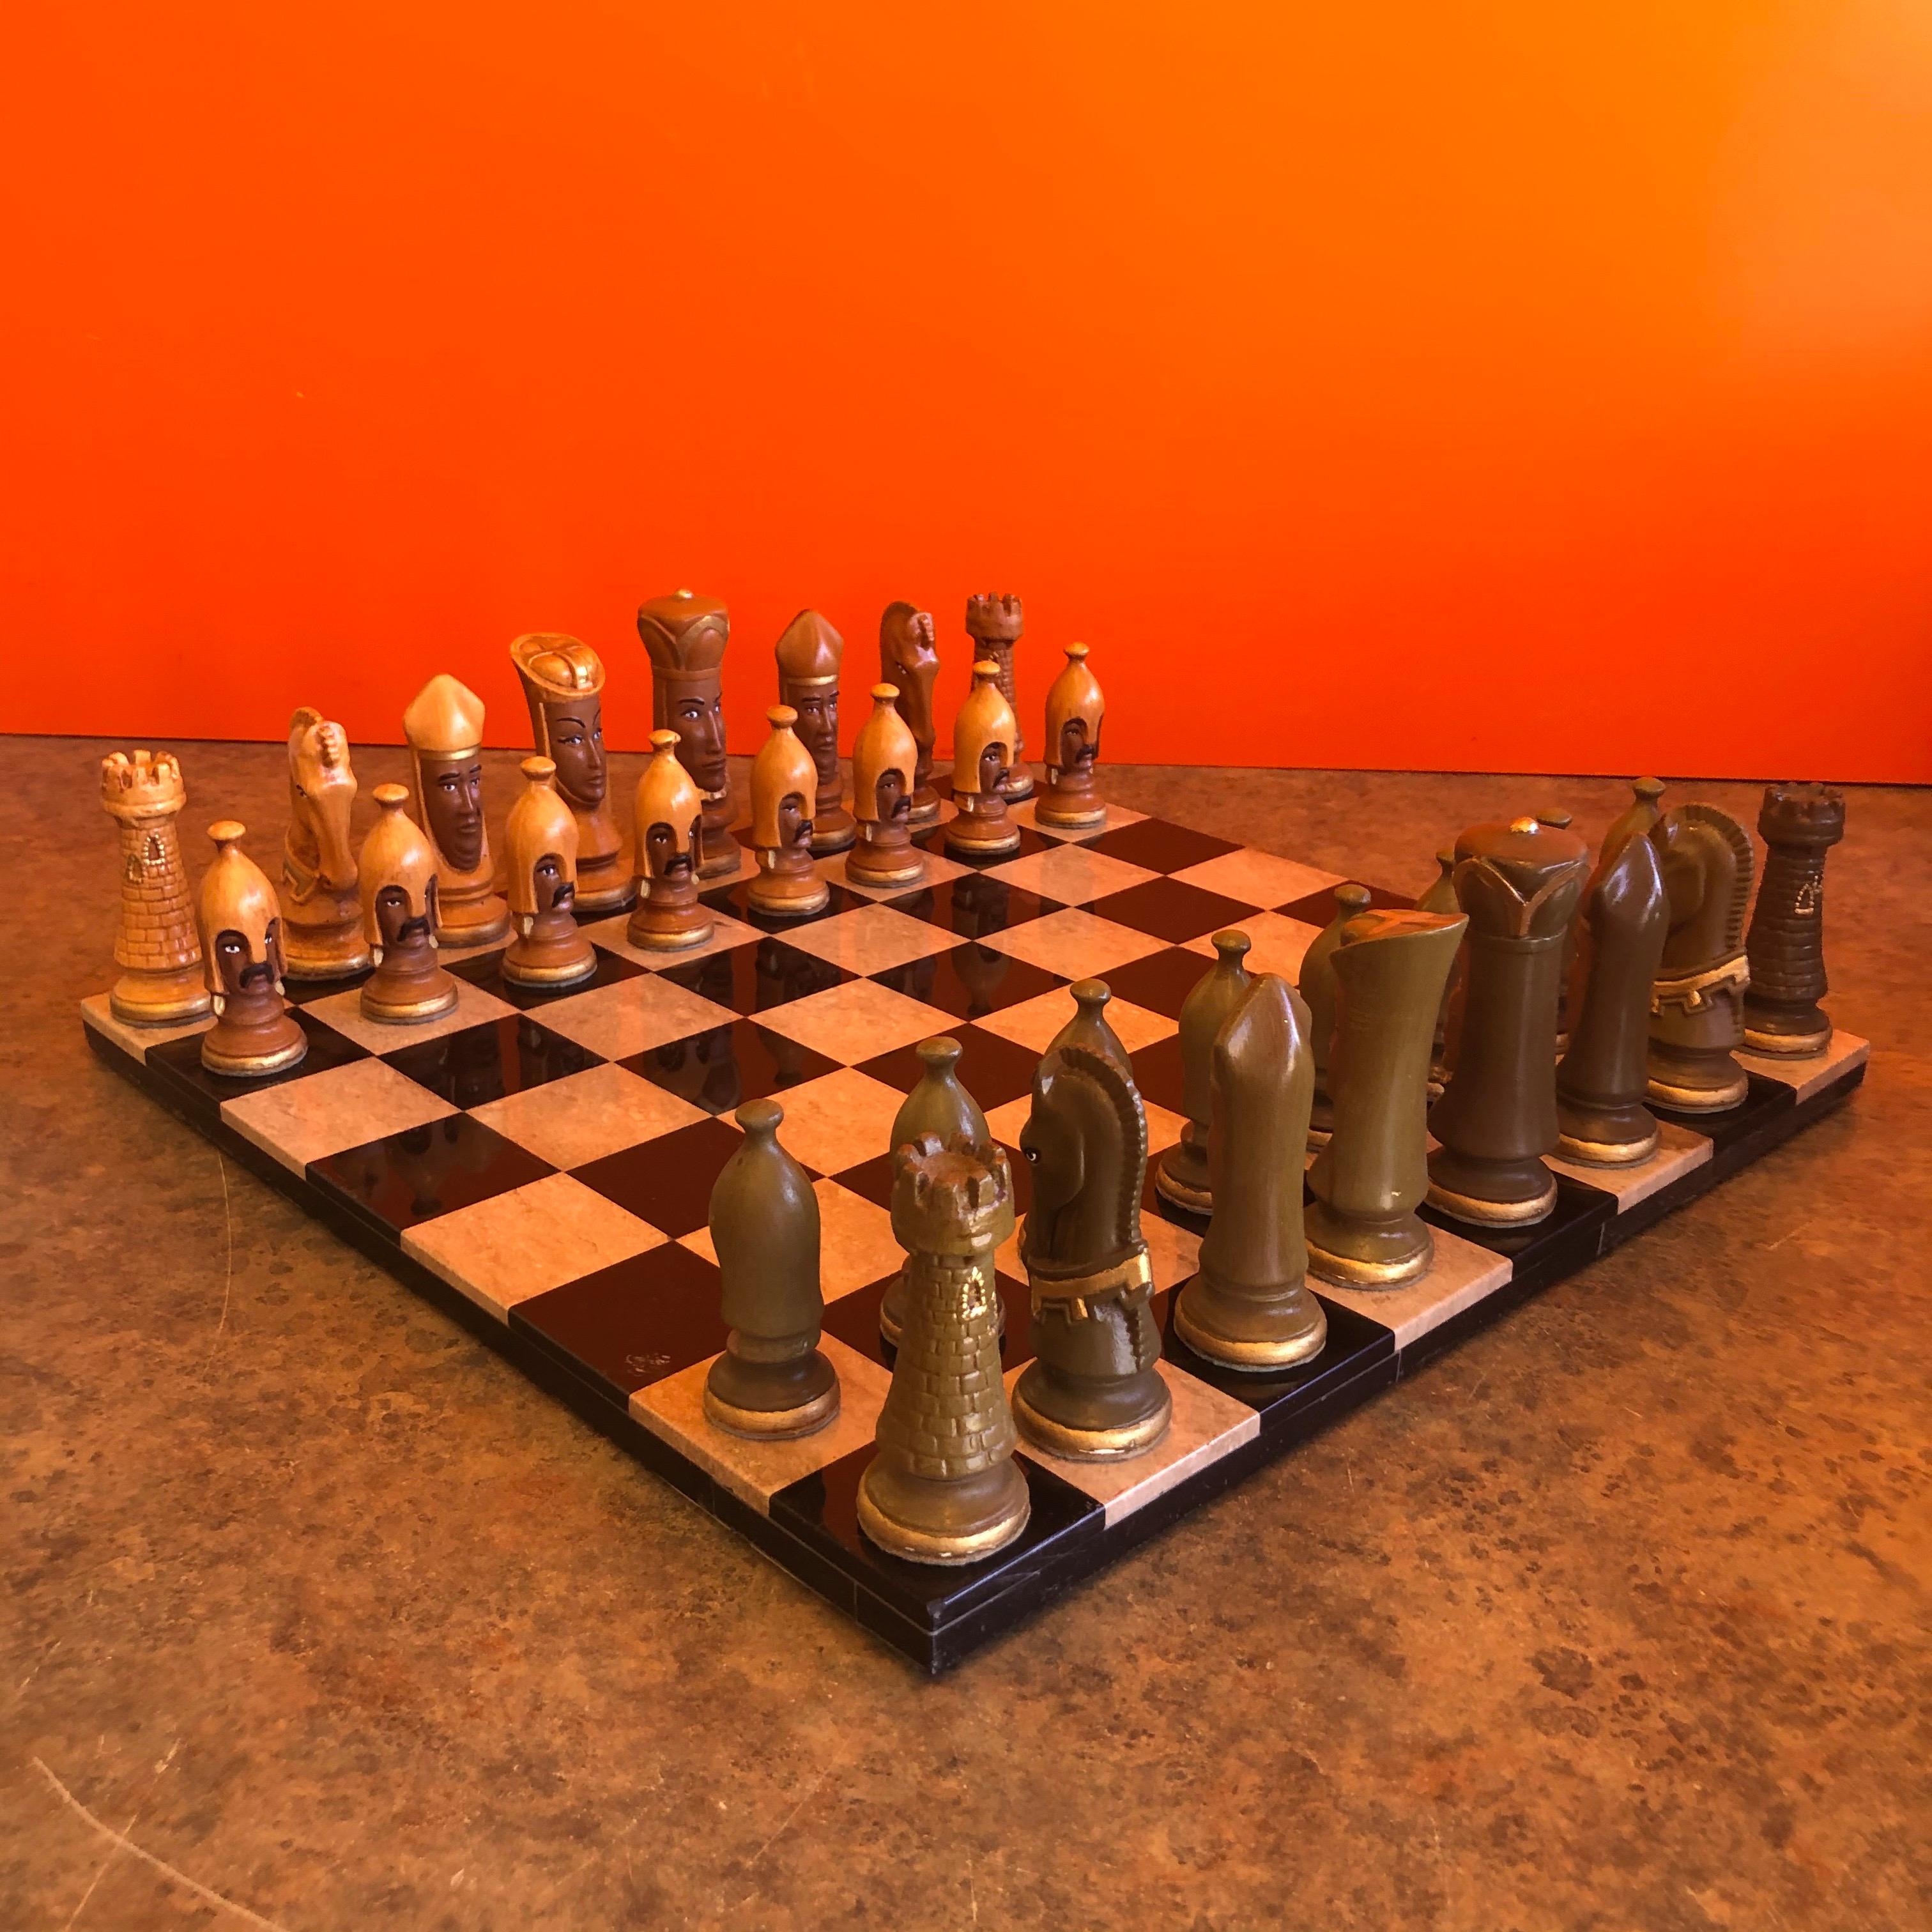 duncan chess set